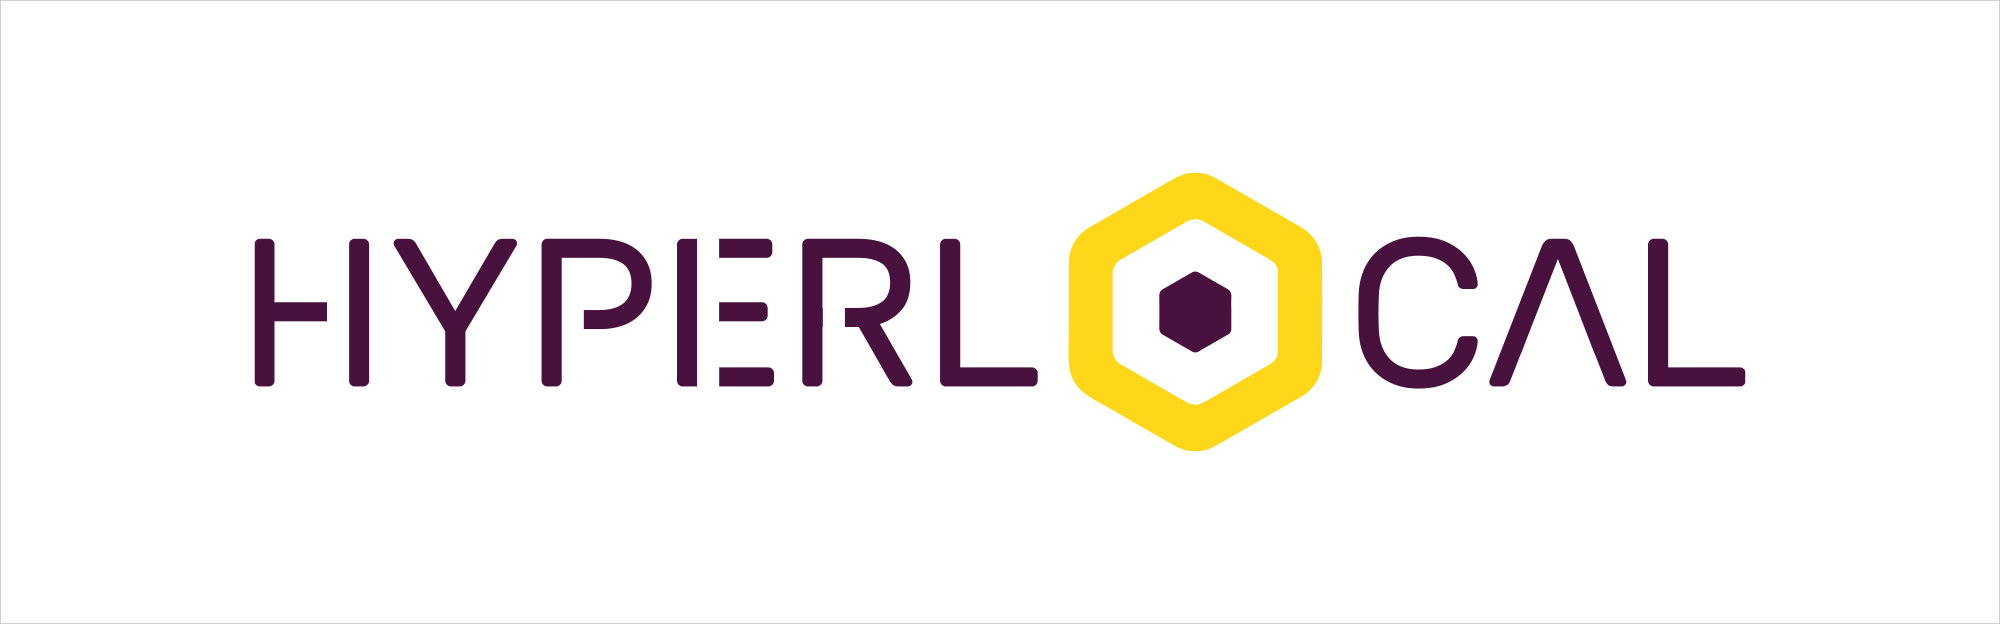 Hyperlocal logo